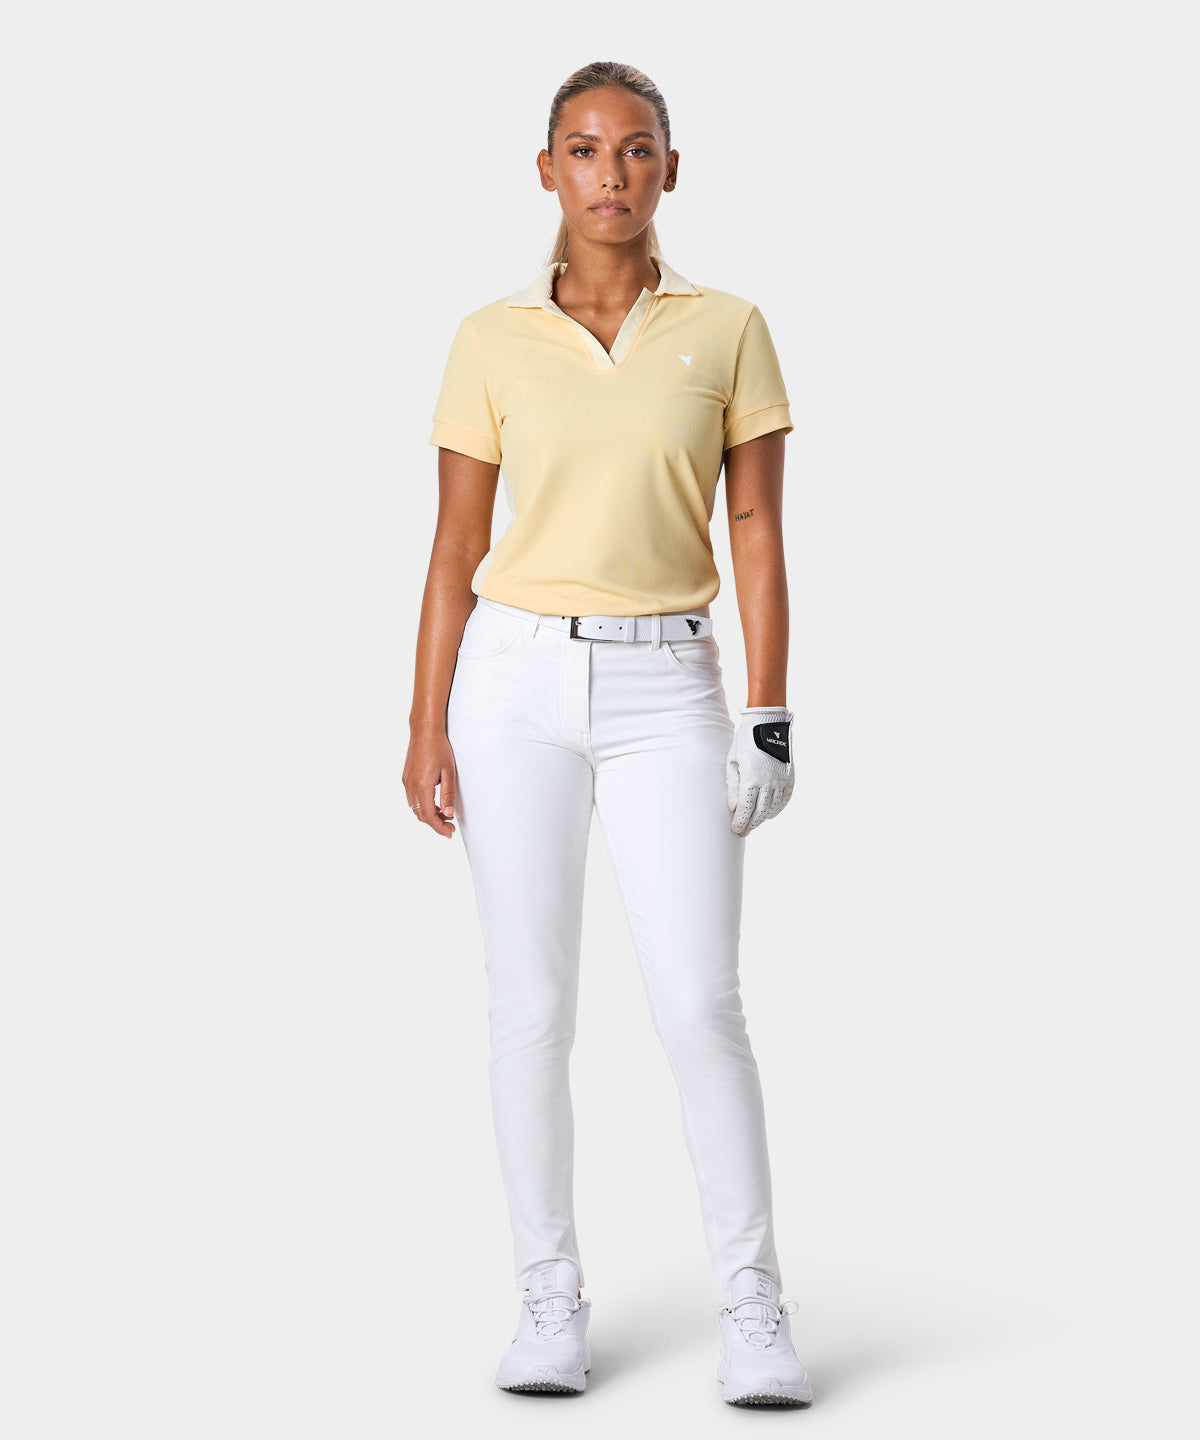 Tori Yellow Polo Shirt